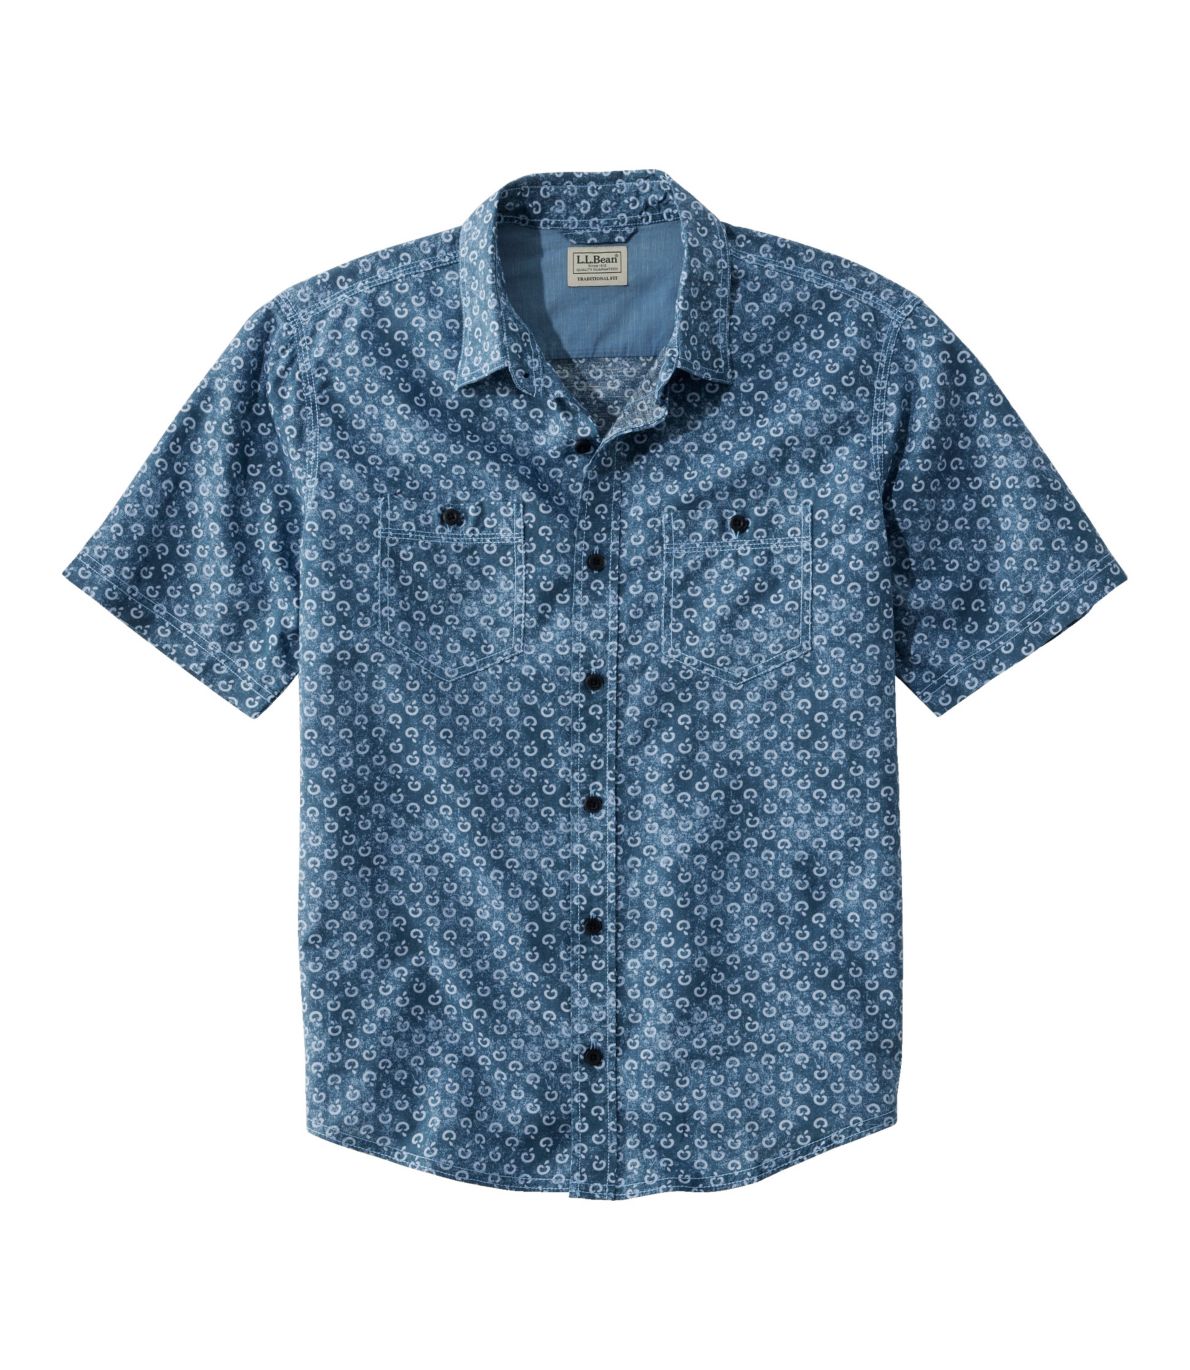 Men's Rugged Linen Blend Shirt, Short-Sleeve, Print, Traditional Untucked Fit